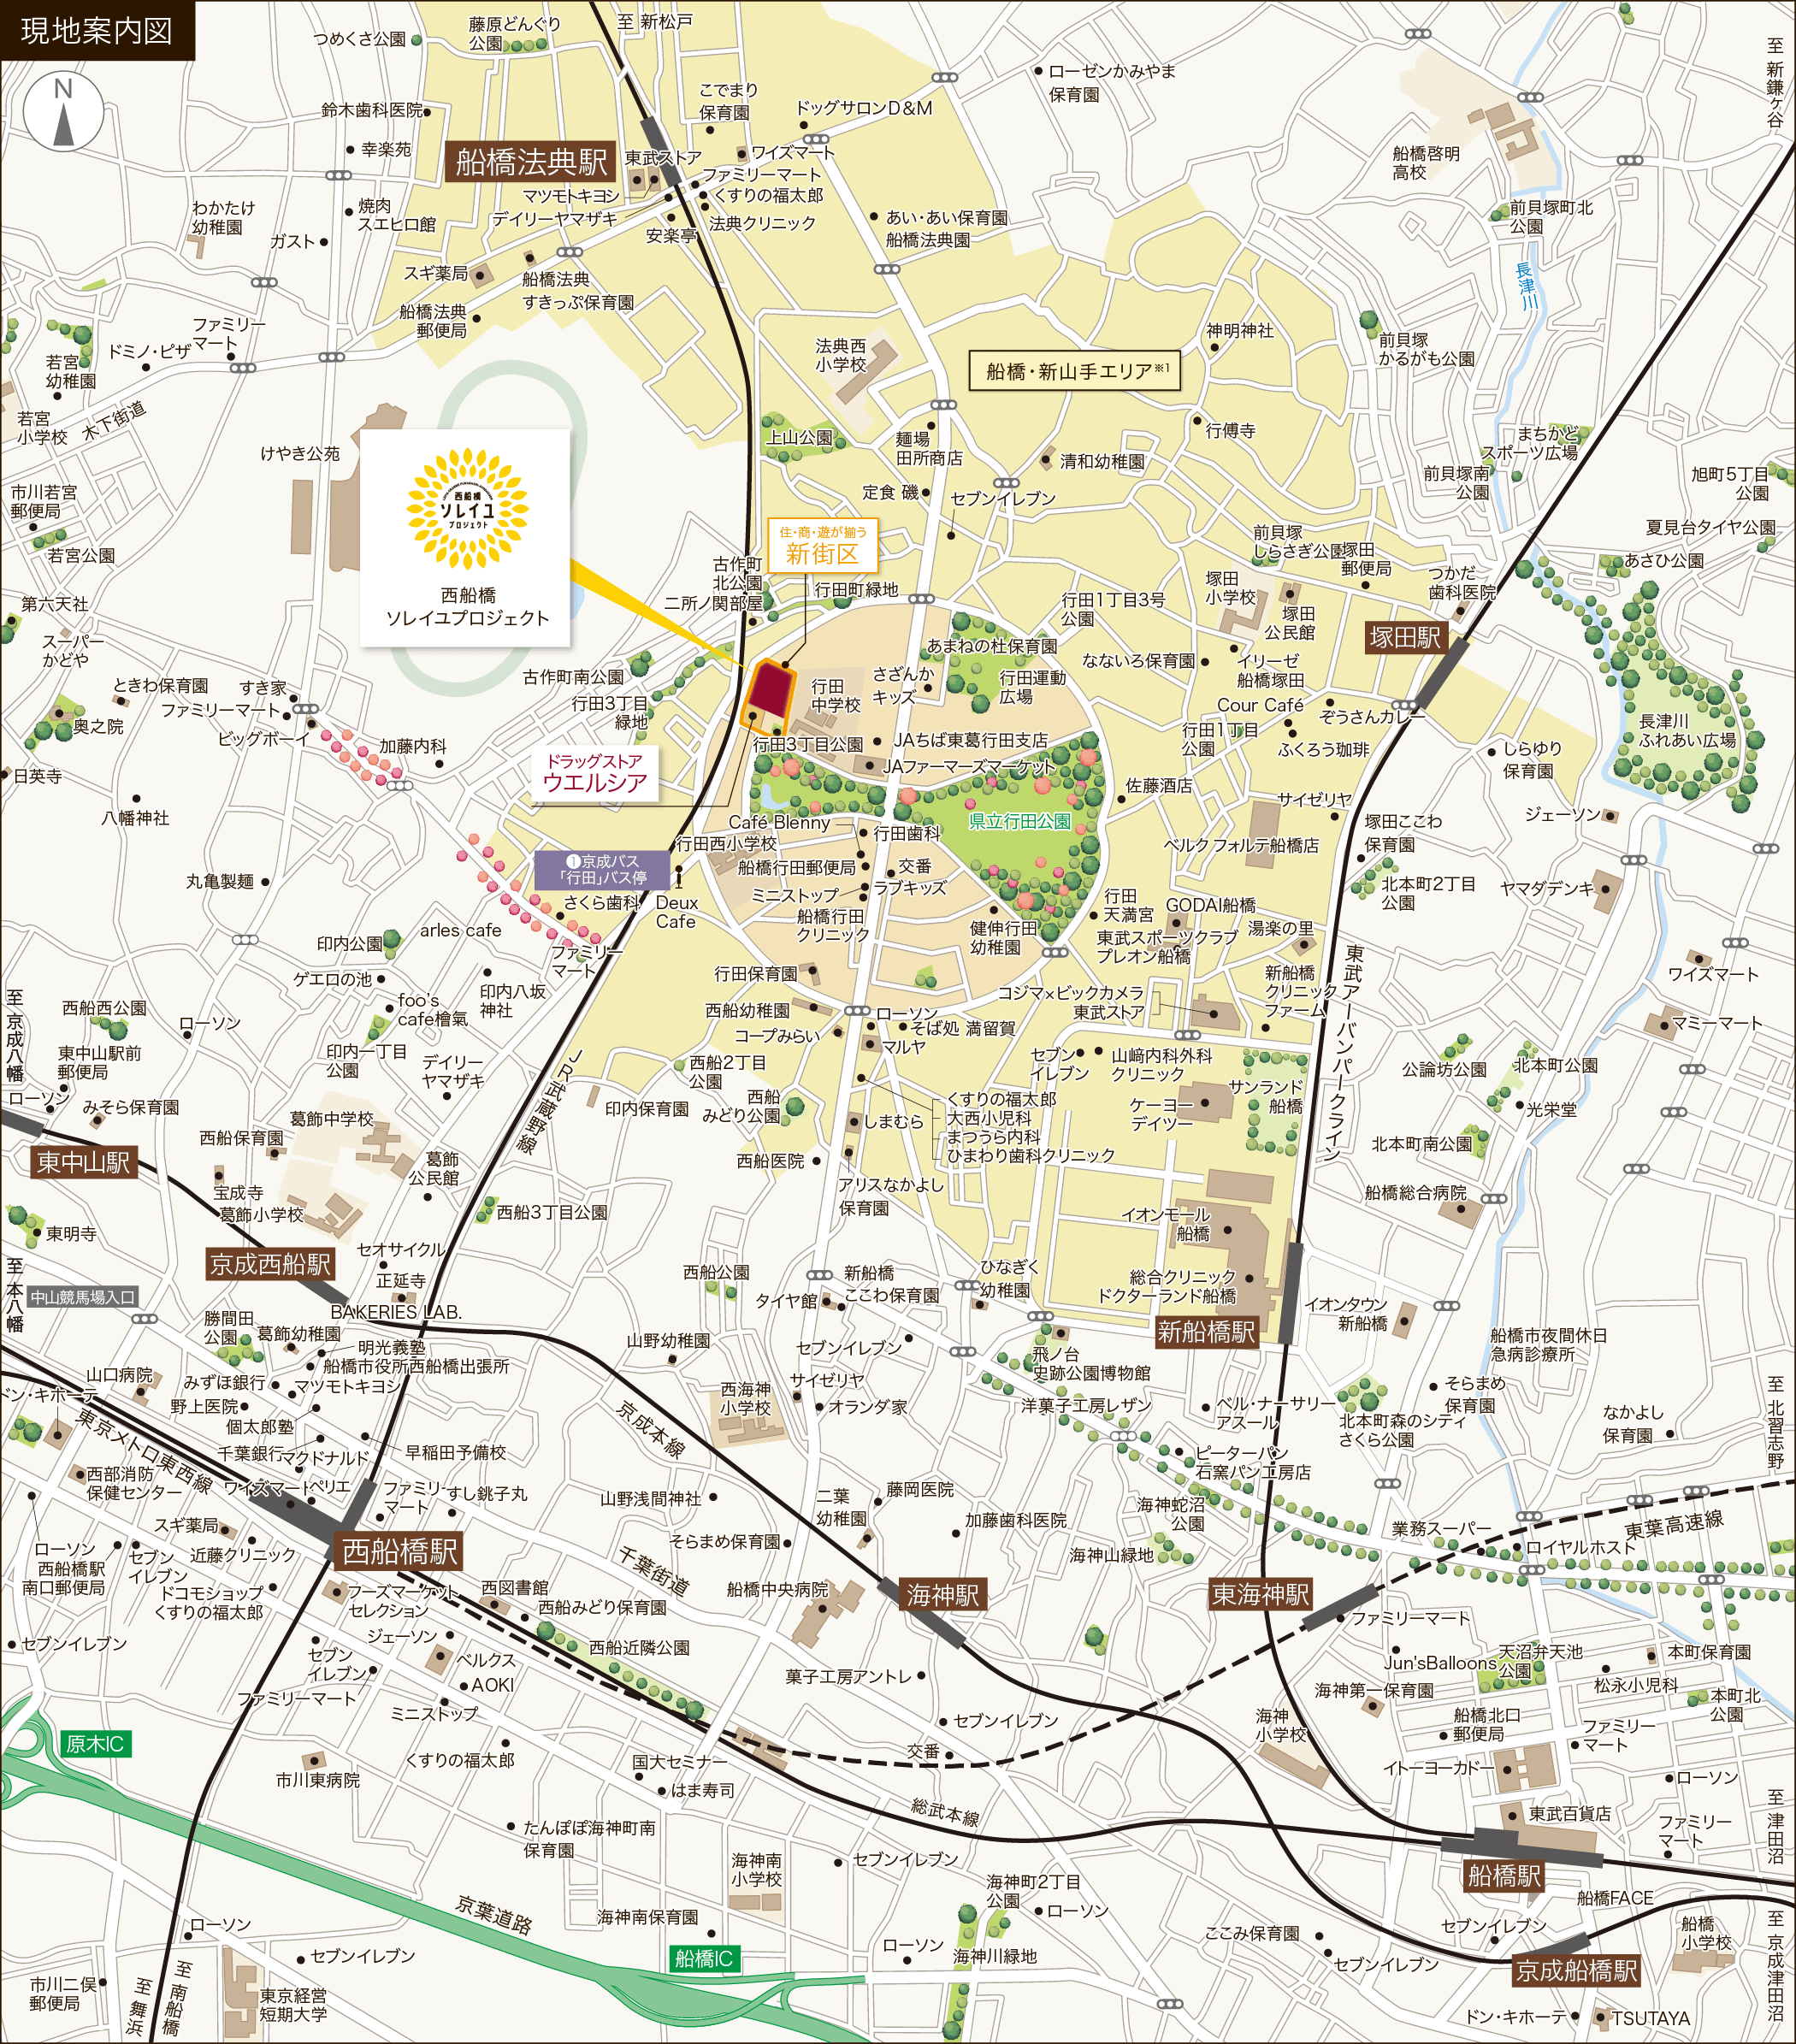 LEPIA GRANDE MAP